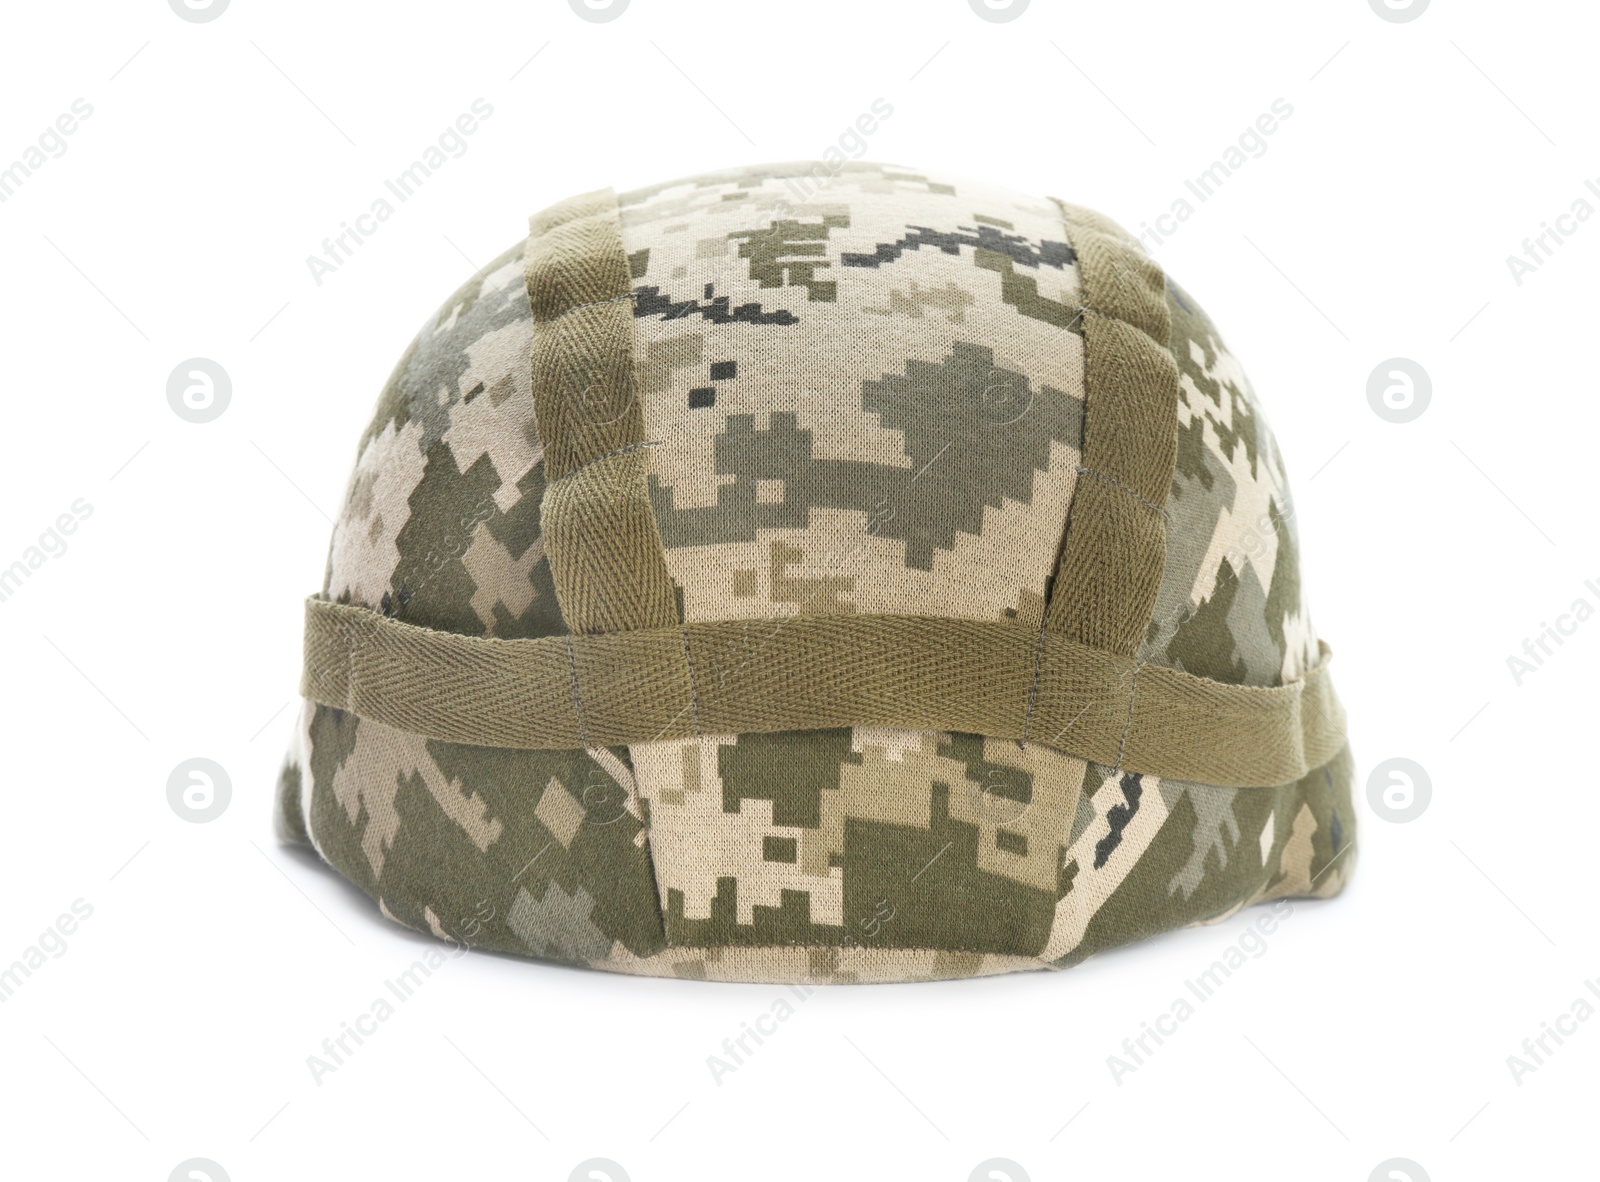 Photo of Military helmet on white background